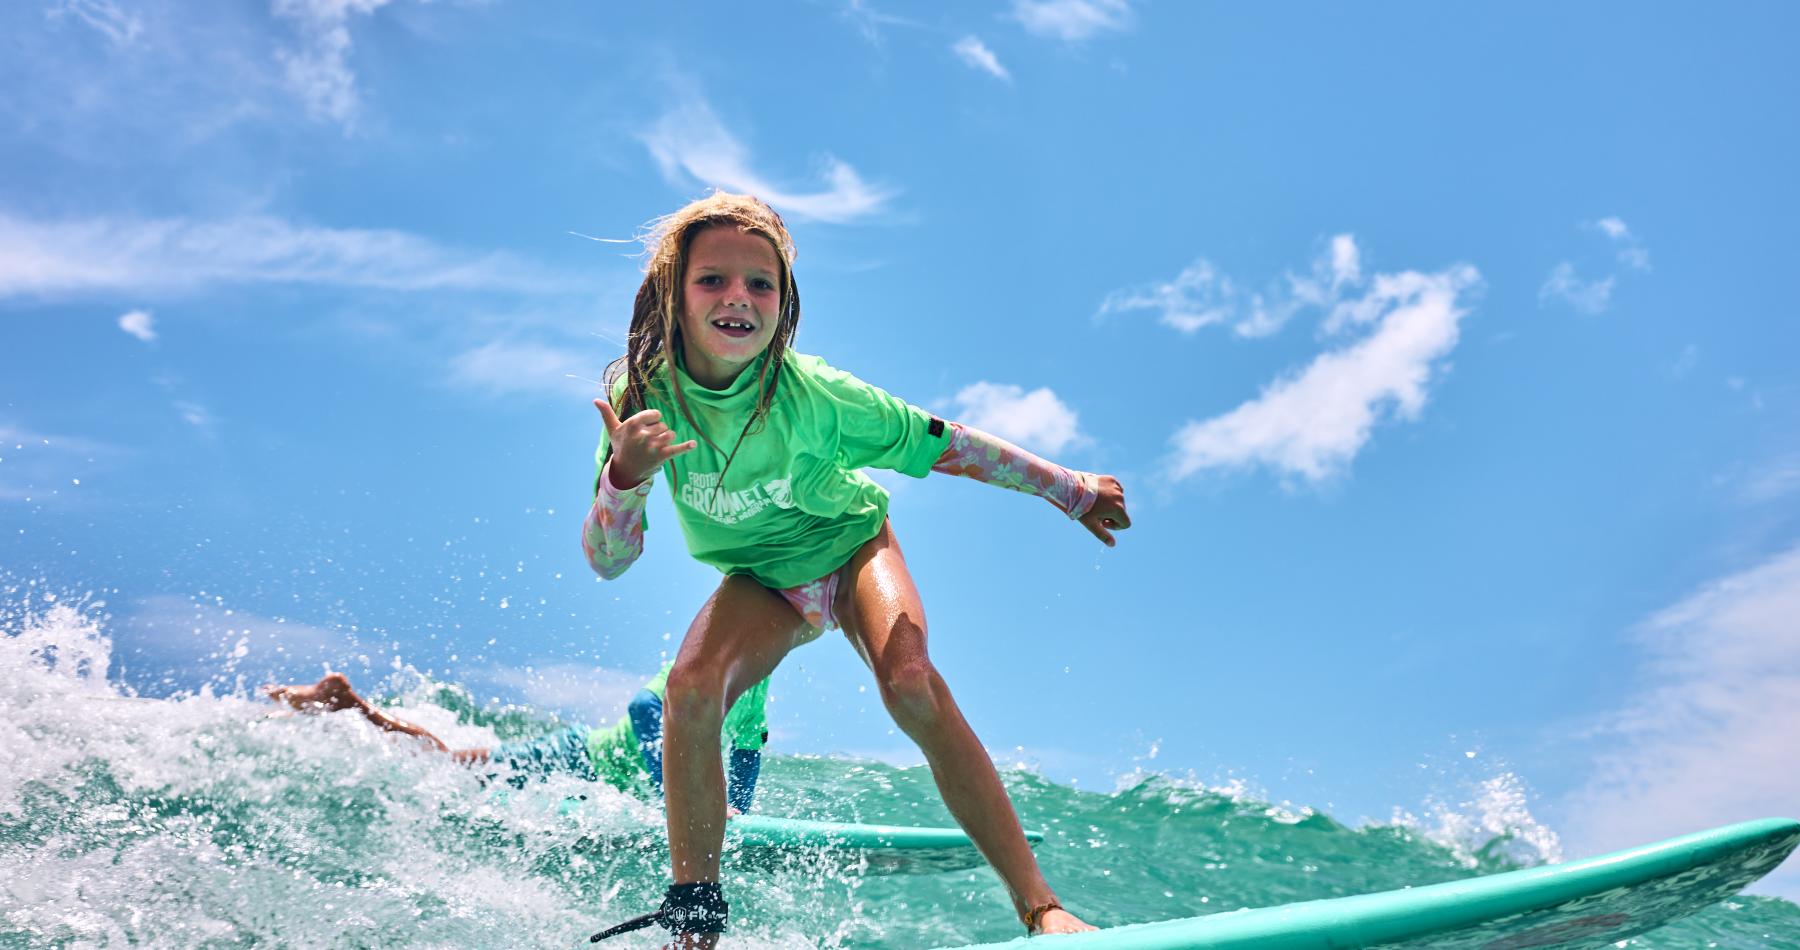 Støjende Tilsvarende balance Learn to surf at Currumbin Alley Surf School - Gold Coast Australia